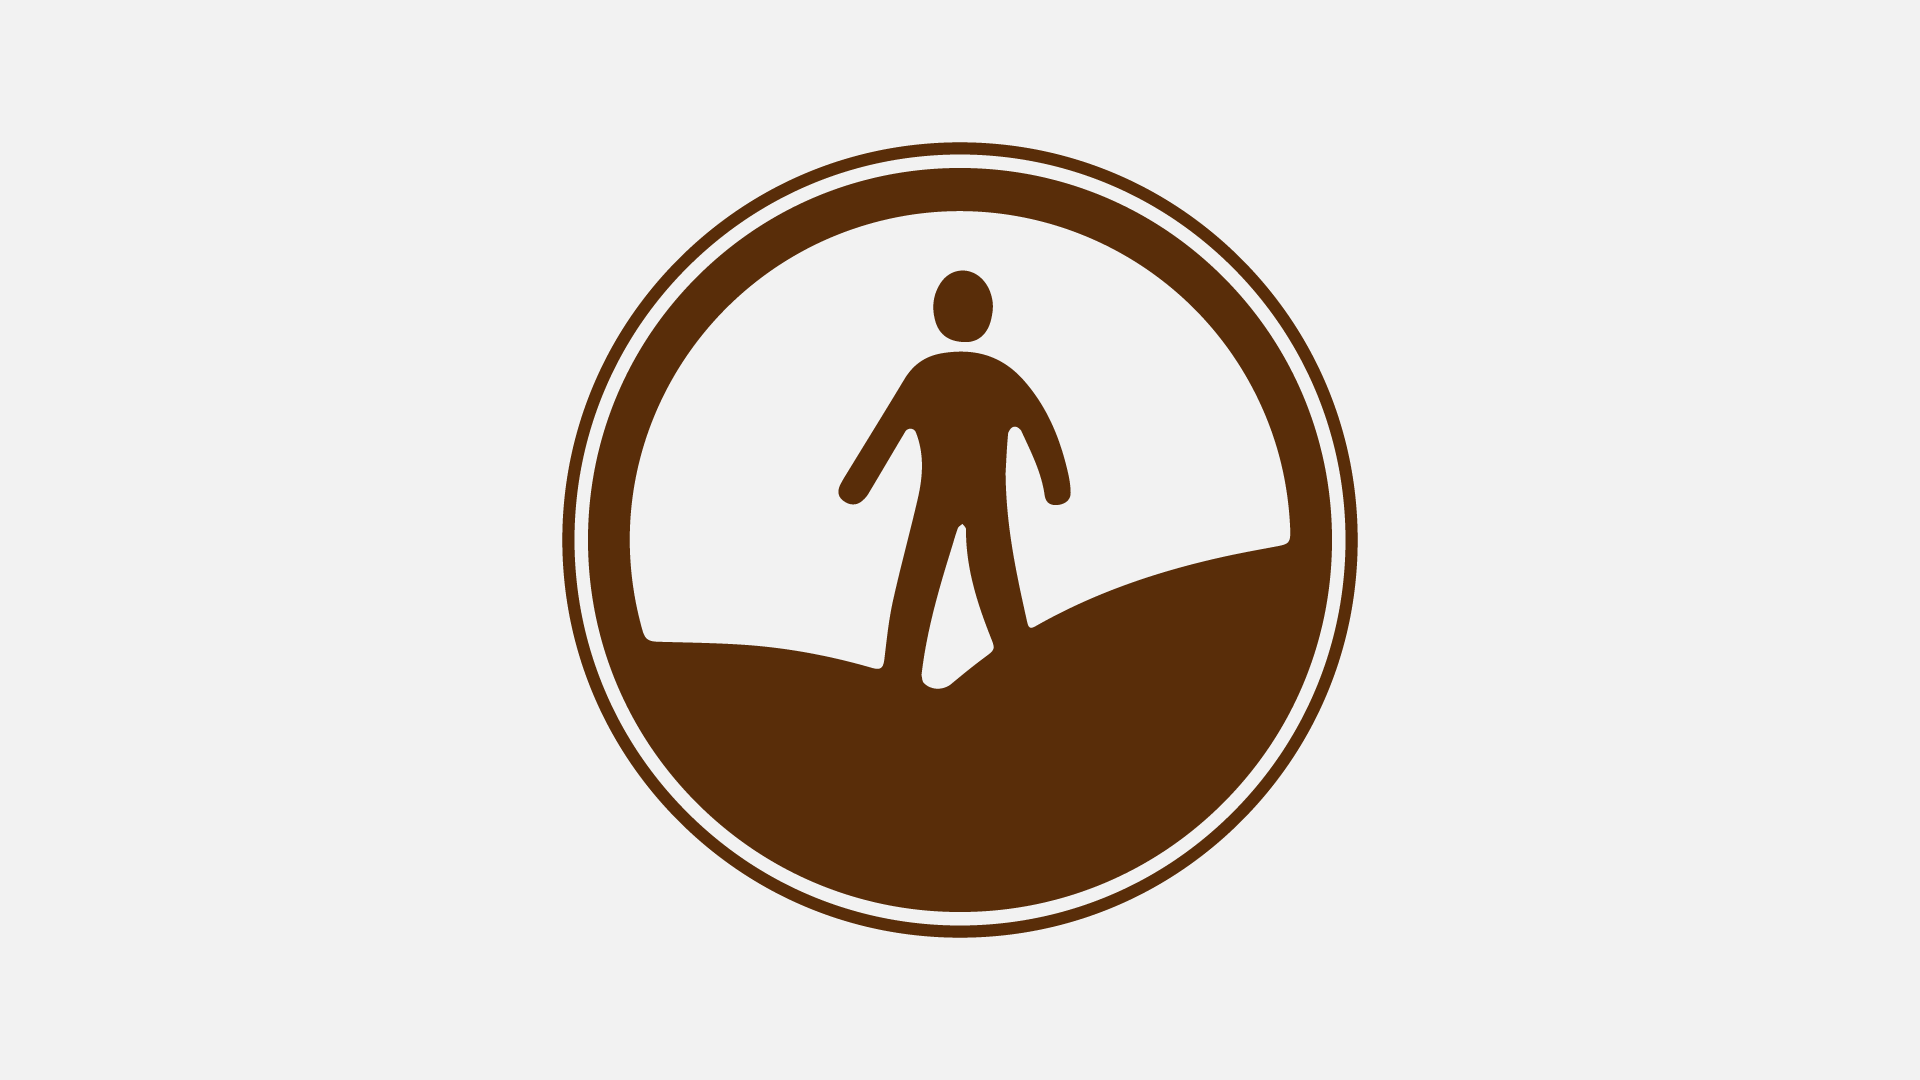 Open access land symbol